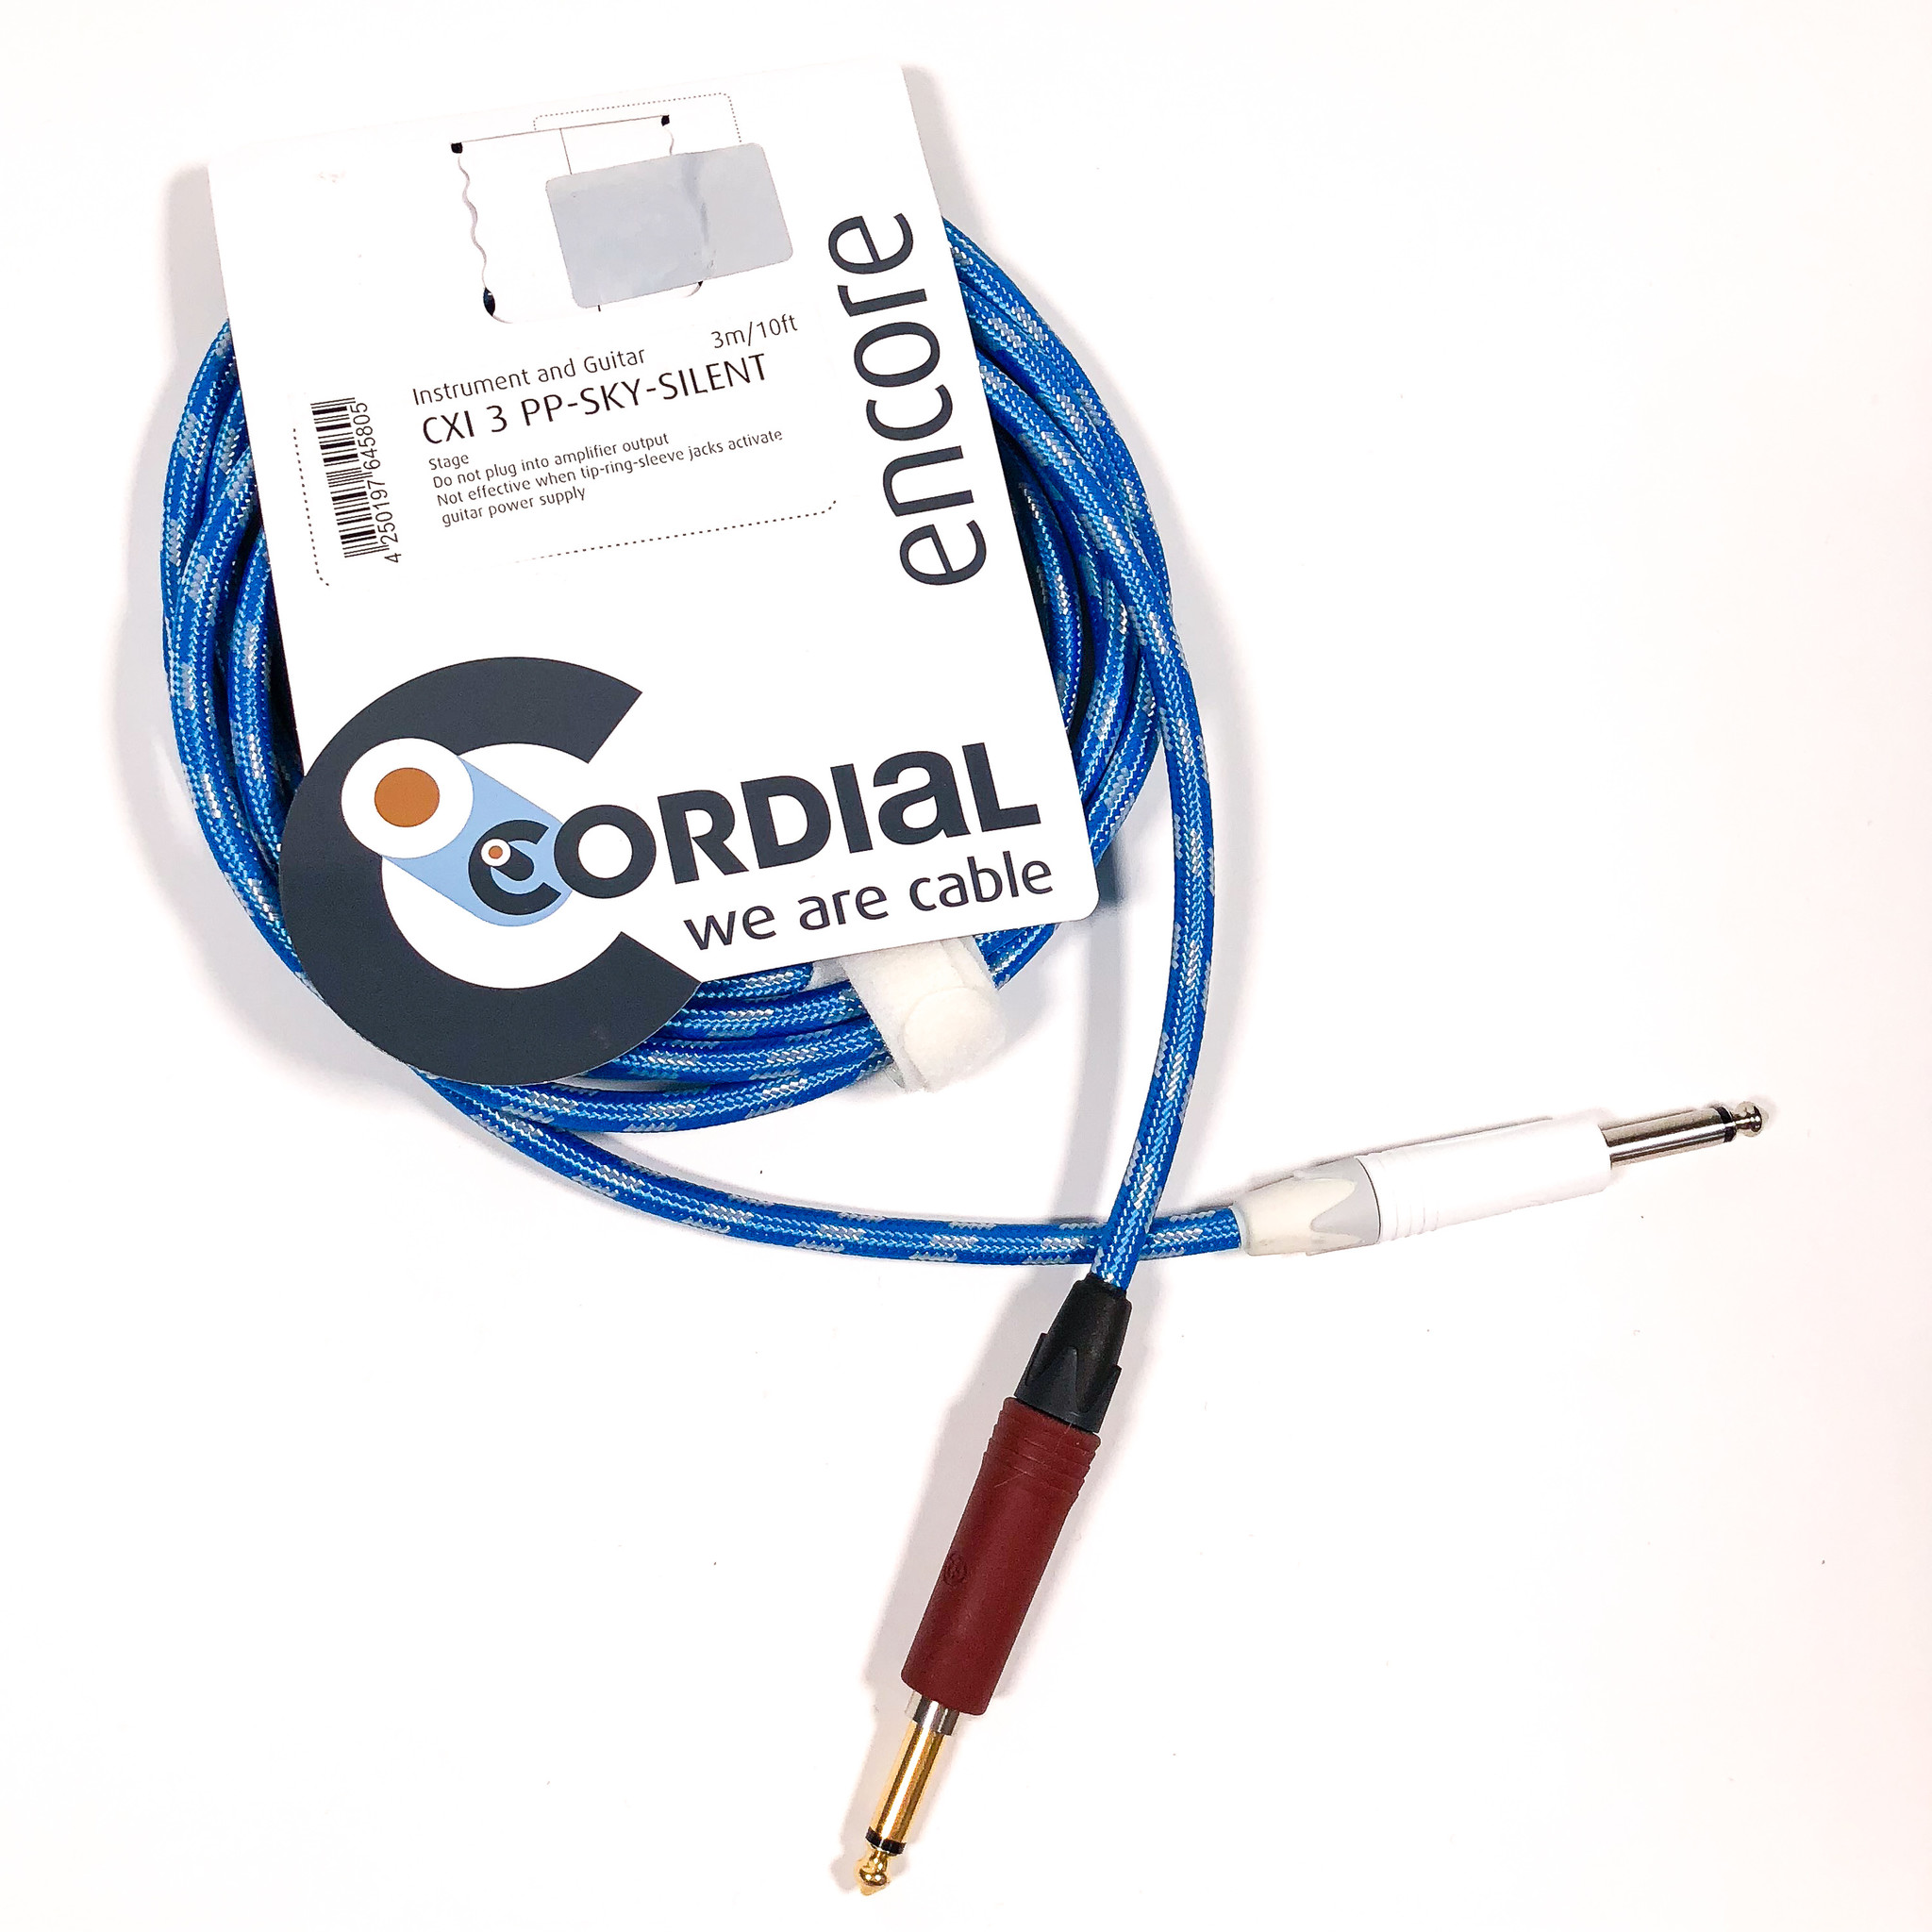 Cordial 3m /~10ft Inst. Cable, 1/4'' Neutrik Conns. w/ silentPLUG , CXI 3 PP-SKY-SILENT (Germany)